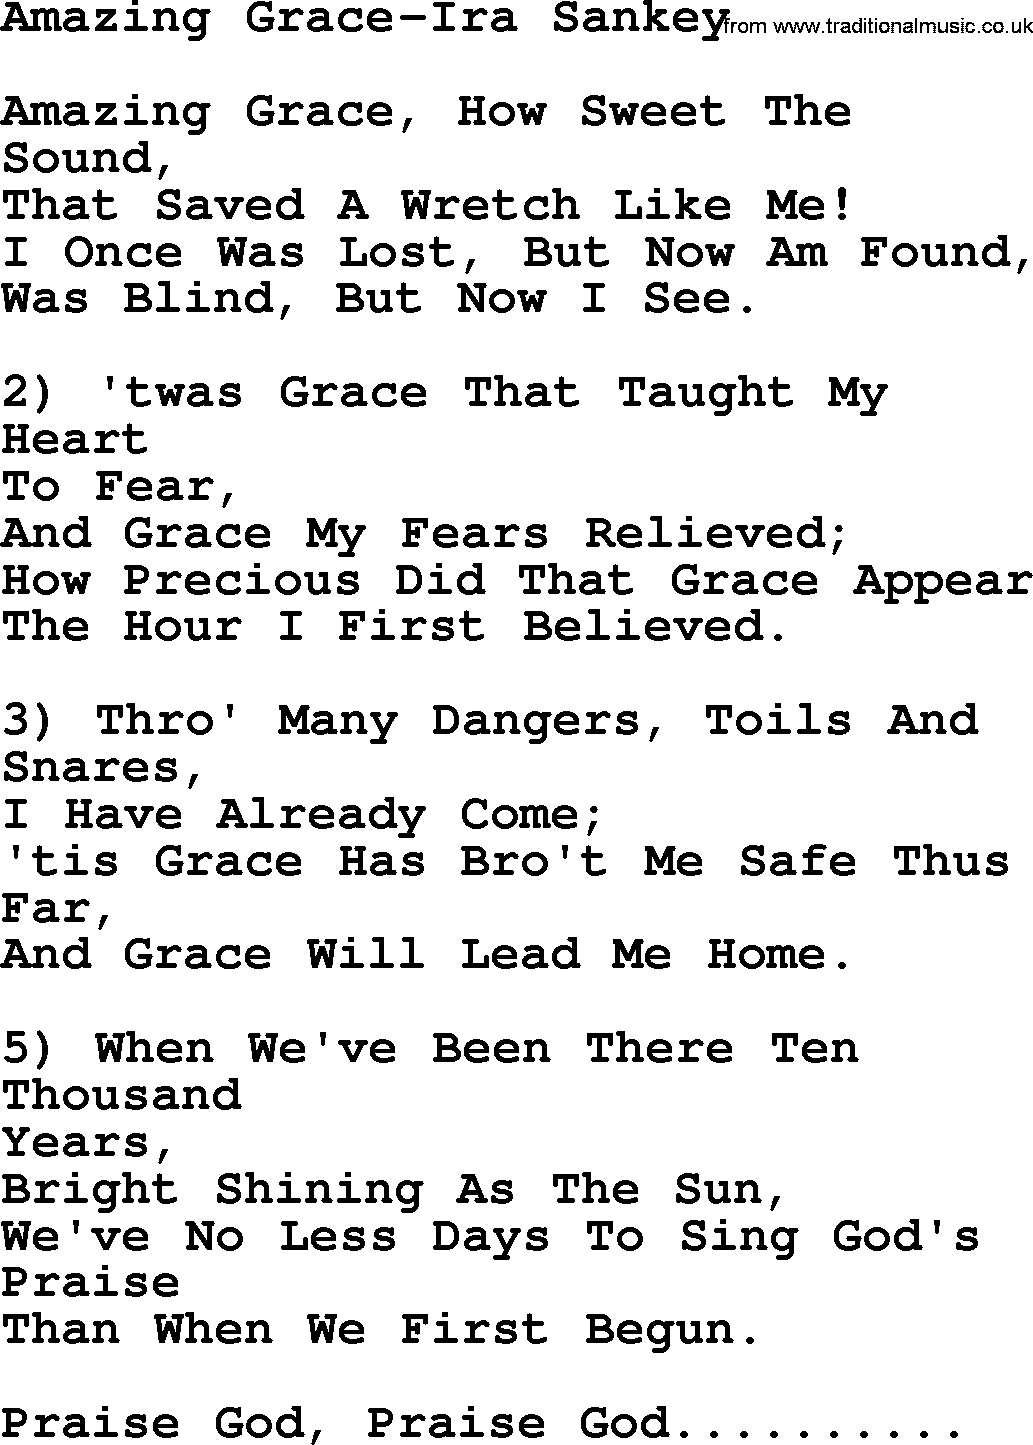 Ira Sankey hymn: Amazing Grace-Ira Sankey, lyrics